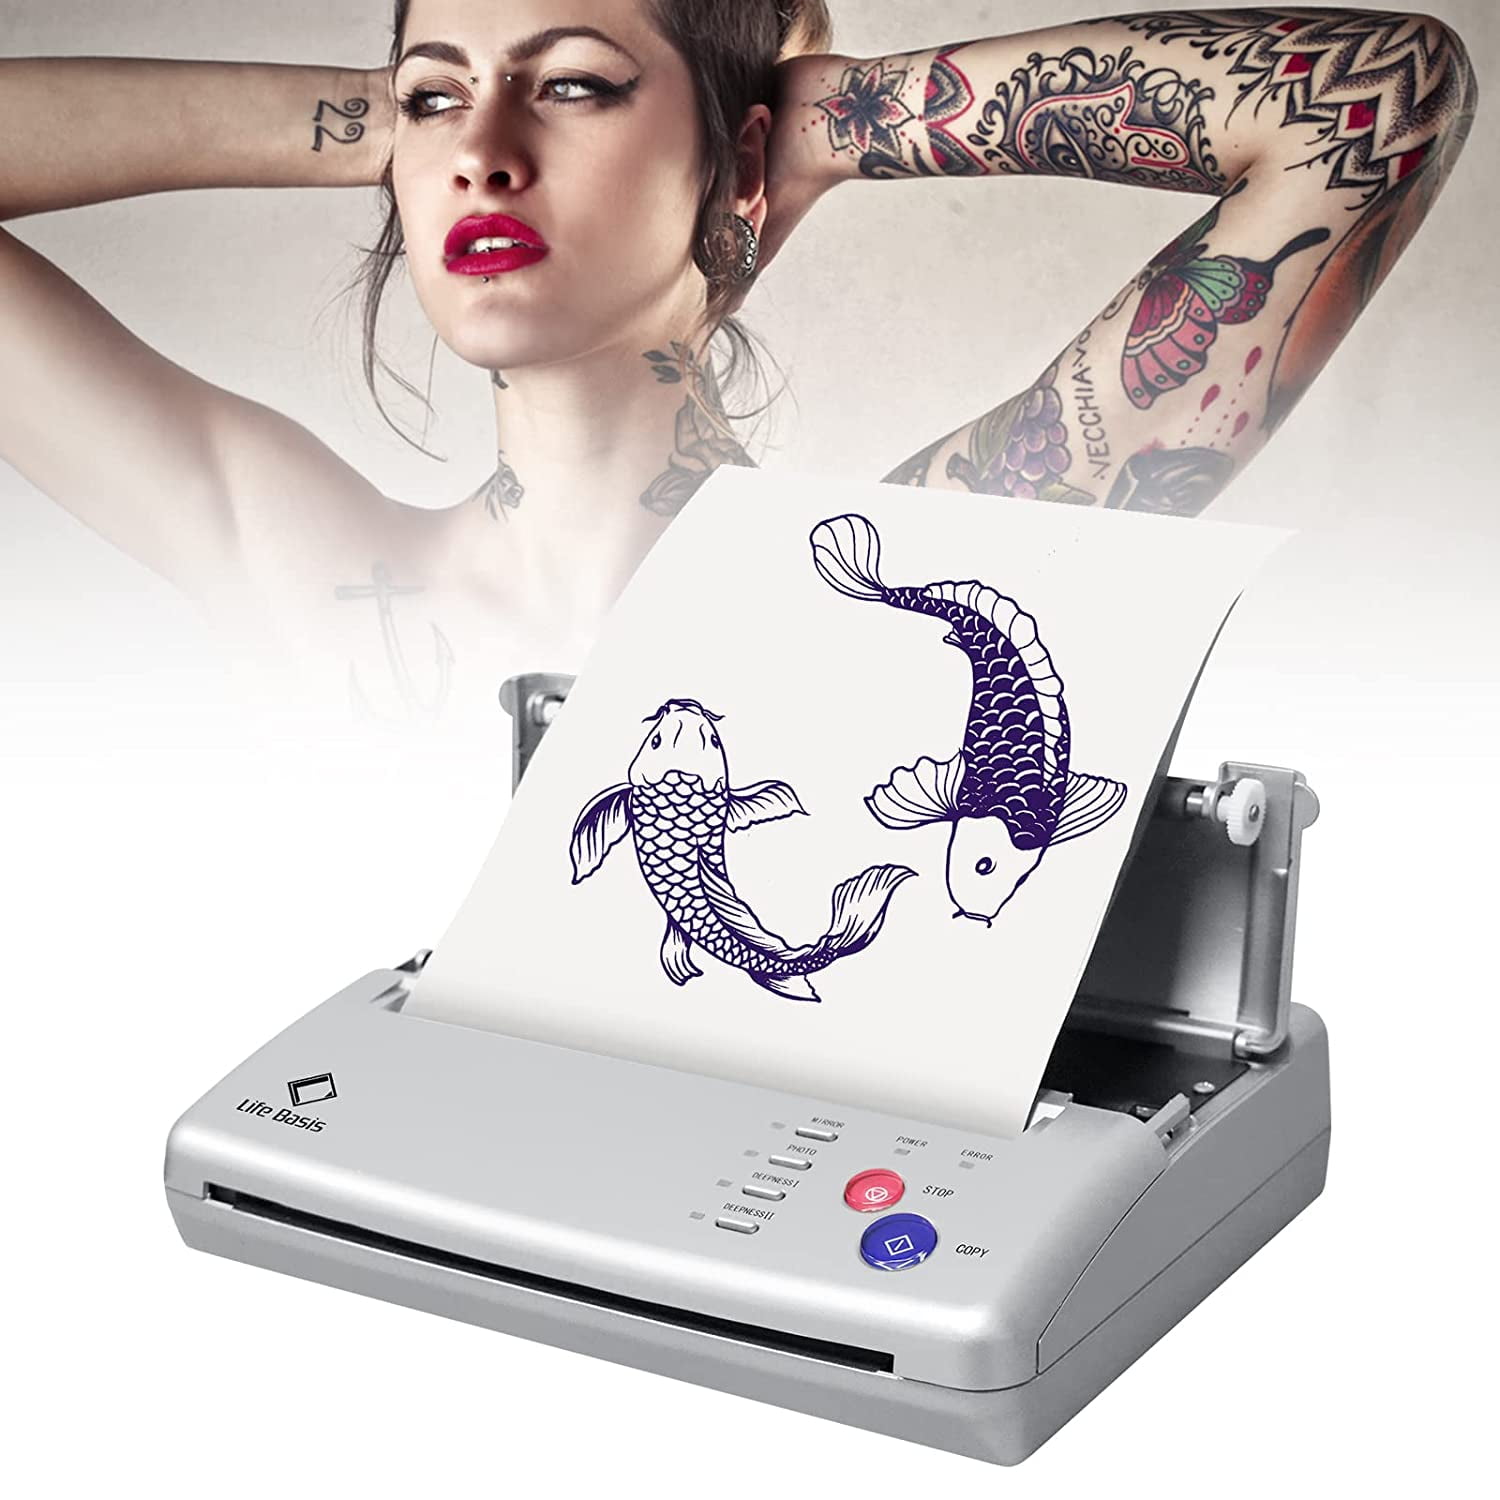 Transfer Tattoo Stencil Maschine Thermal Copier Printer A4